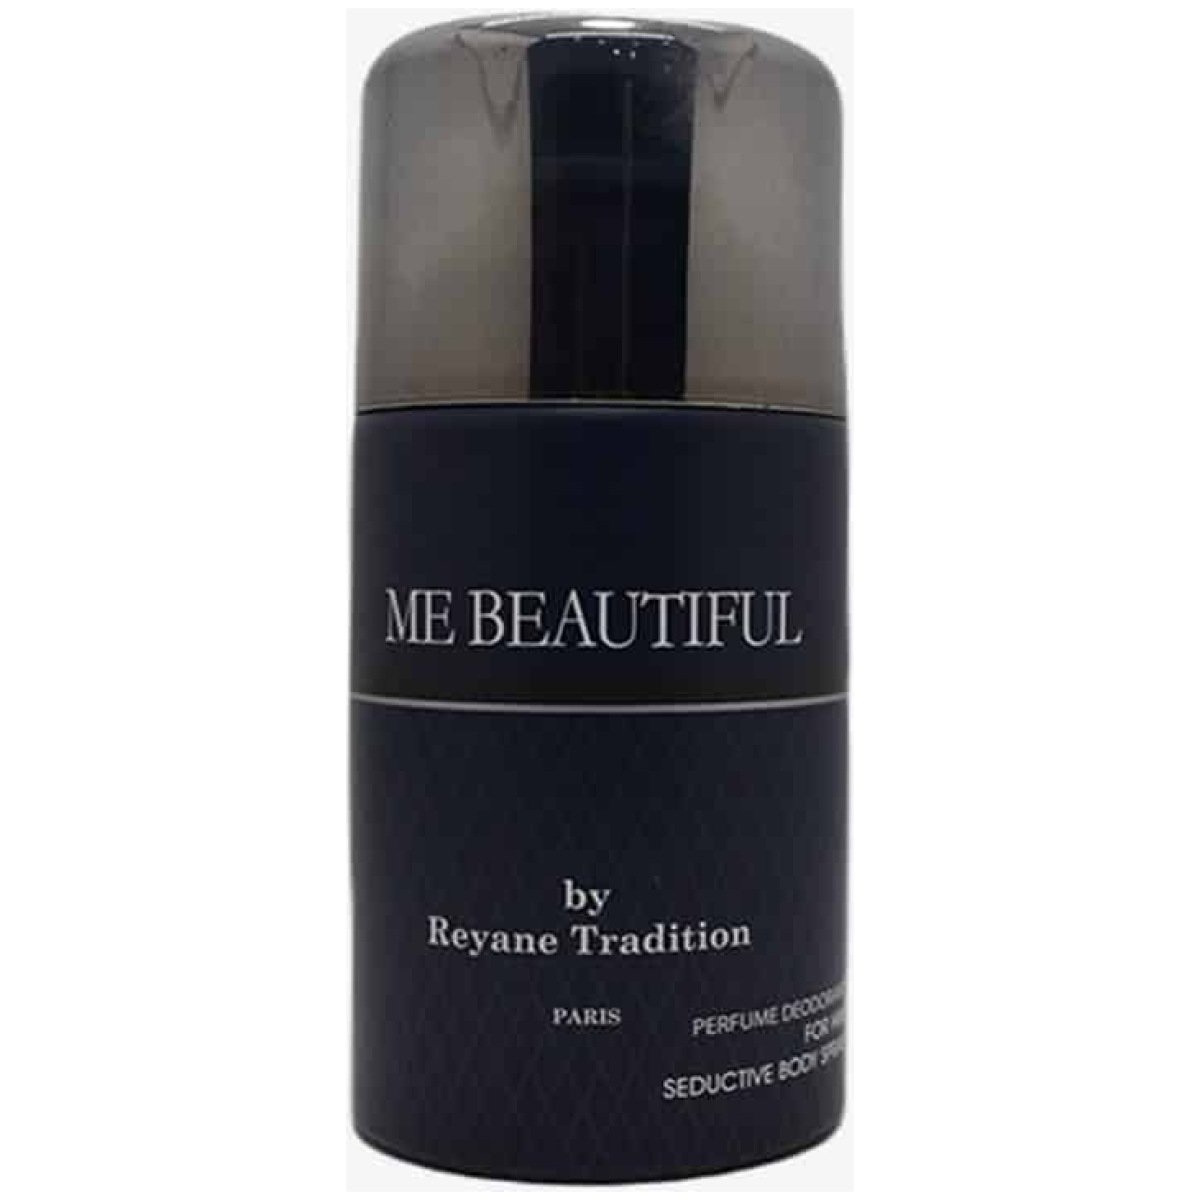 Reyane Tradition Paris Me Beautiful Deodorant Perfume 250ml